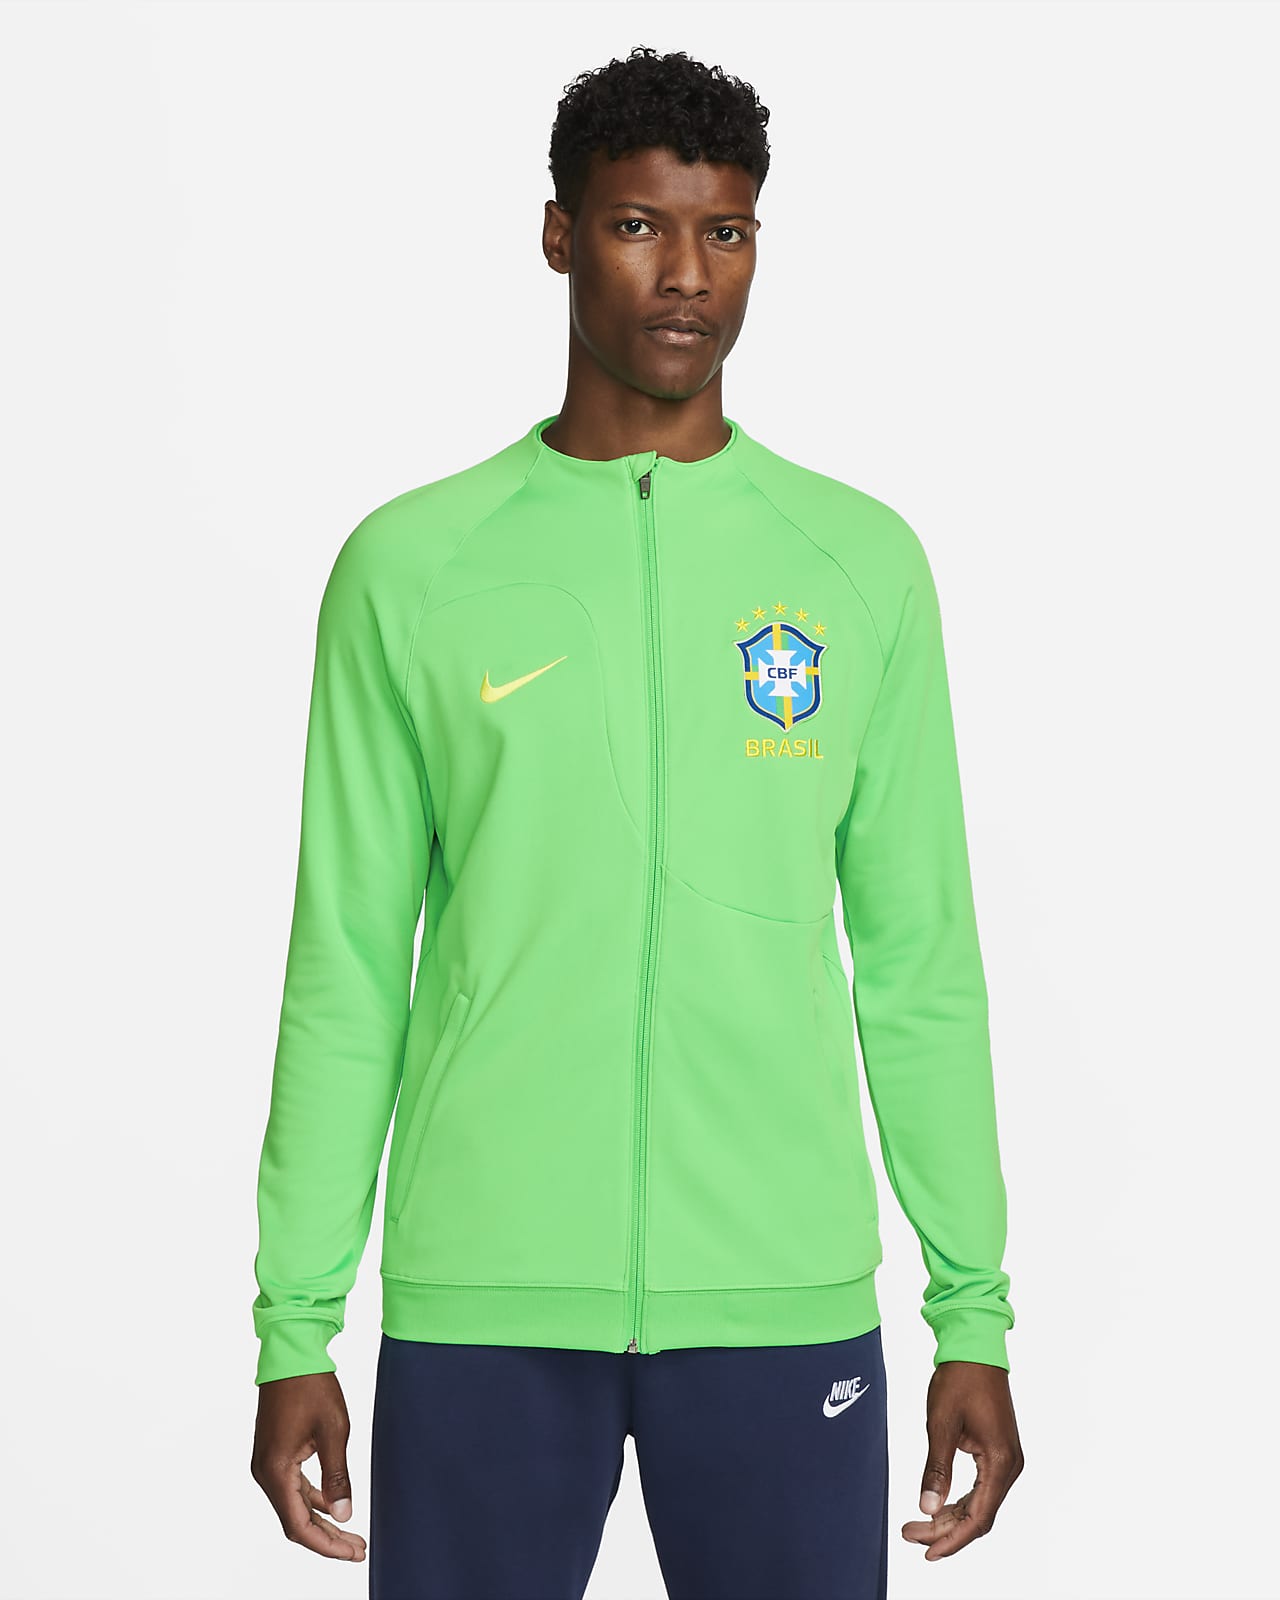 Nike NikeLab Volt Dynamic Reveal Team Brazil Rio Olympics 2016 Jacket ...